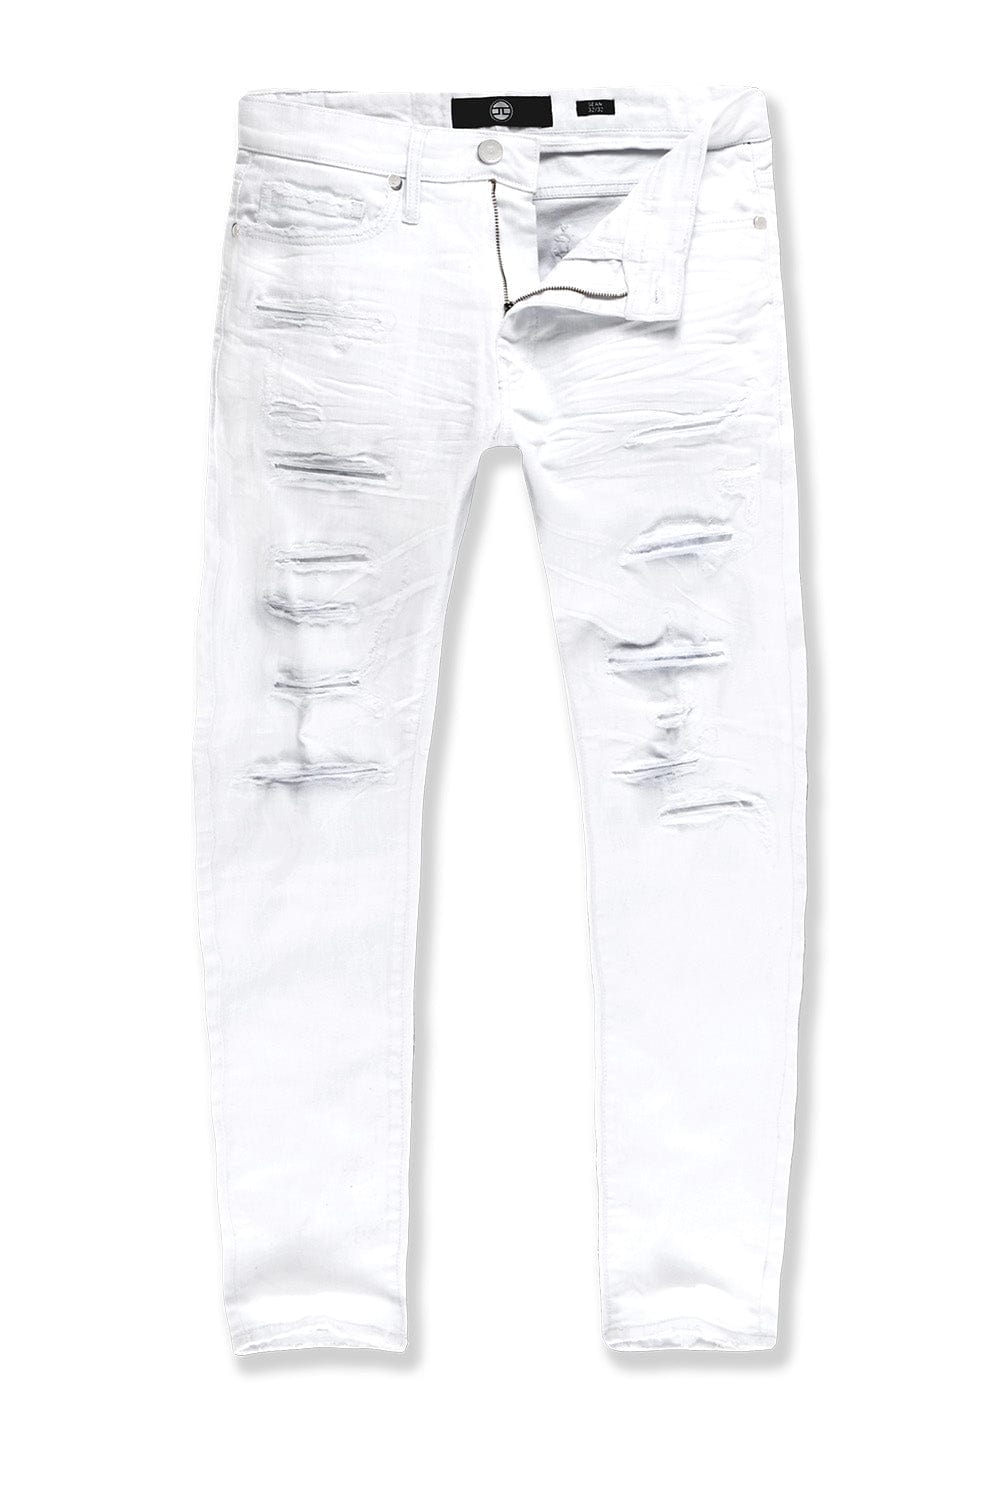 Jordan Craig Collins - Tribeca Twill Pants (Core Colors) White / 32/32